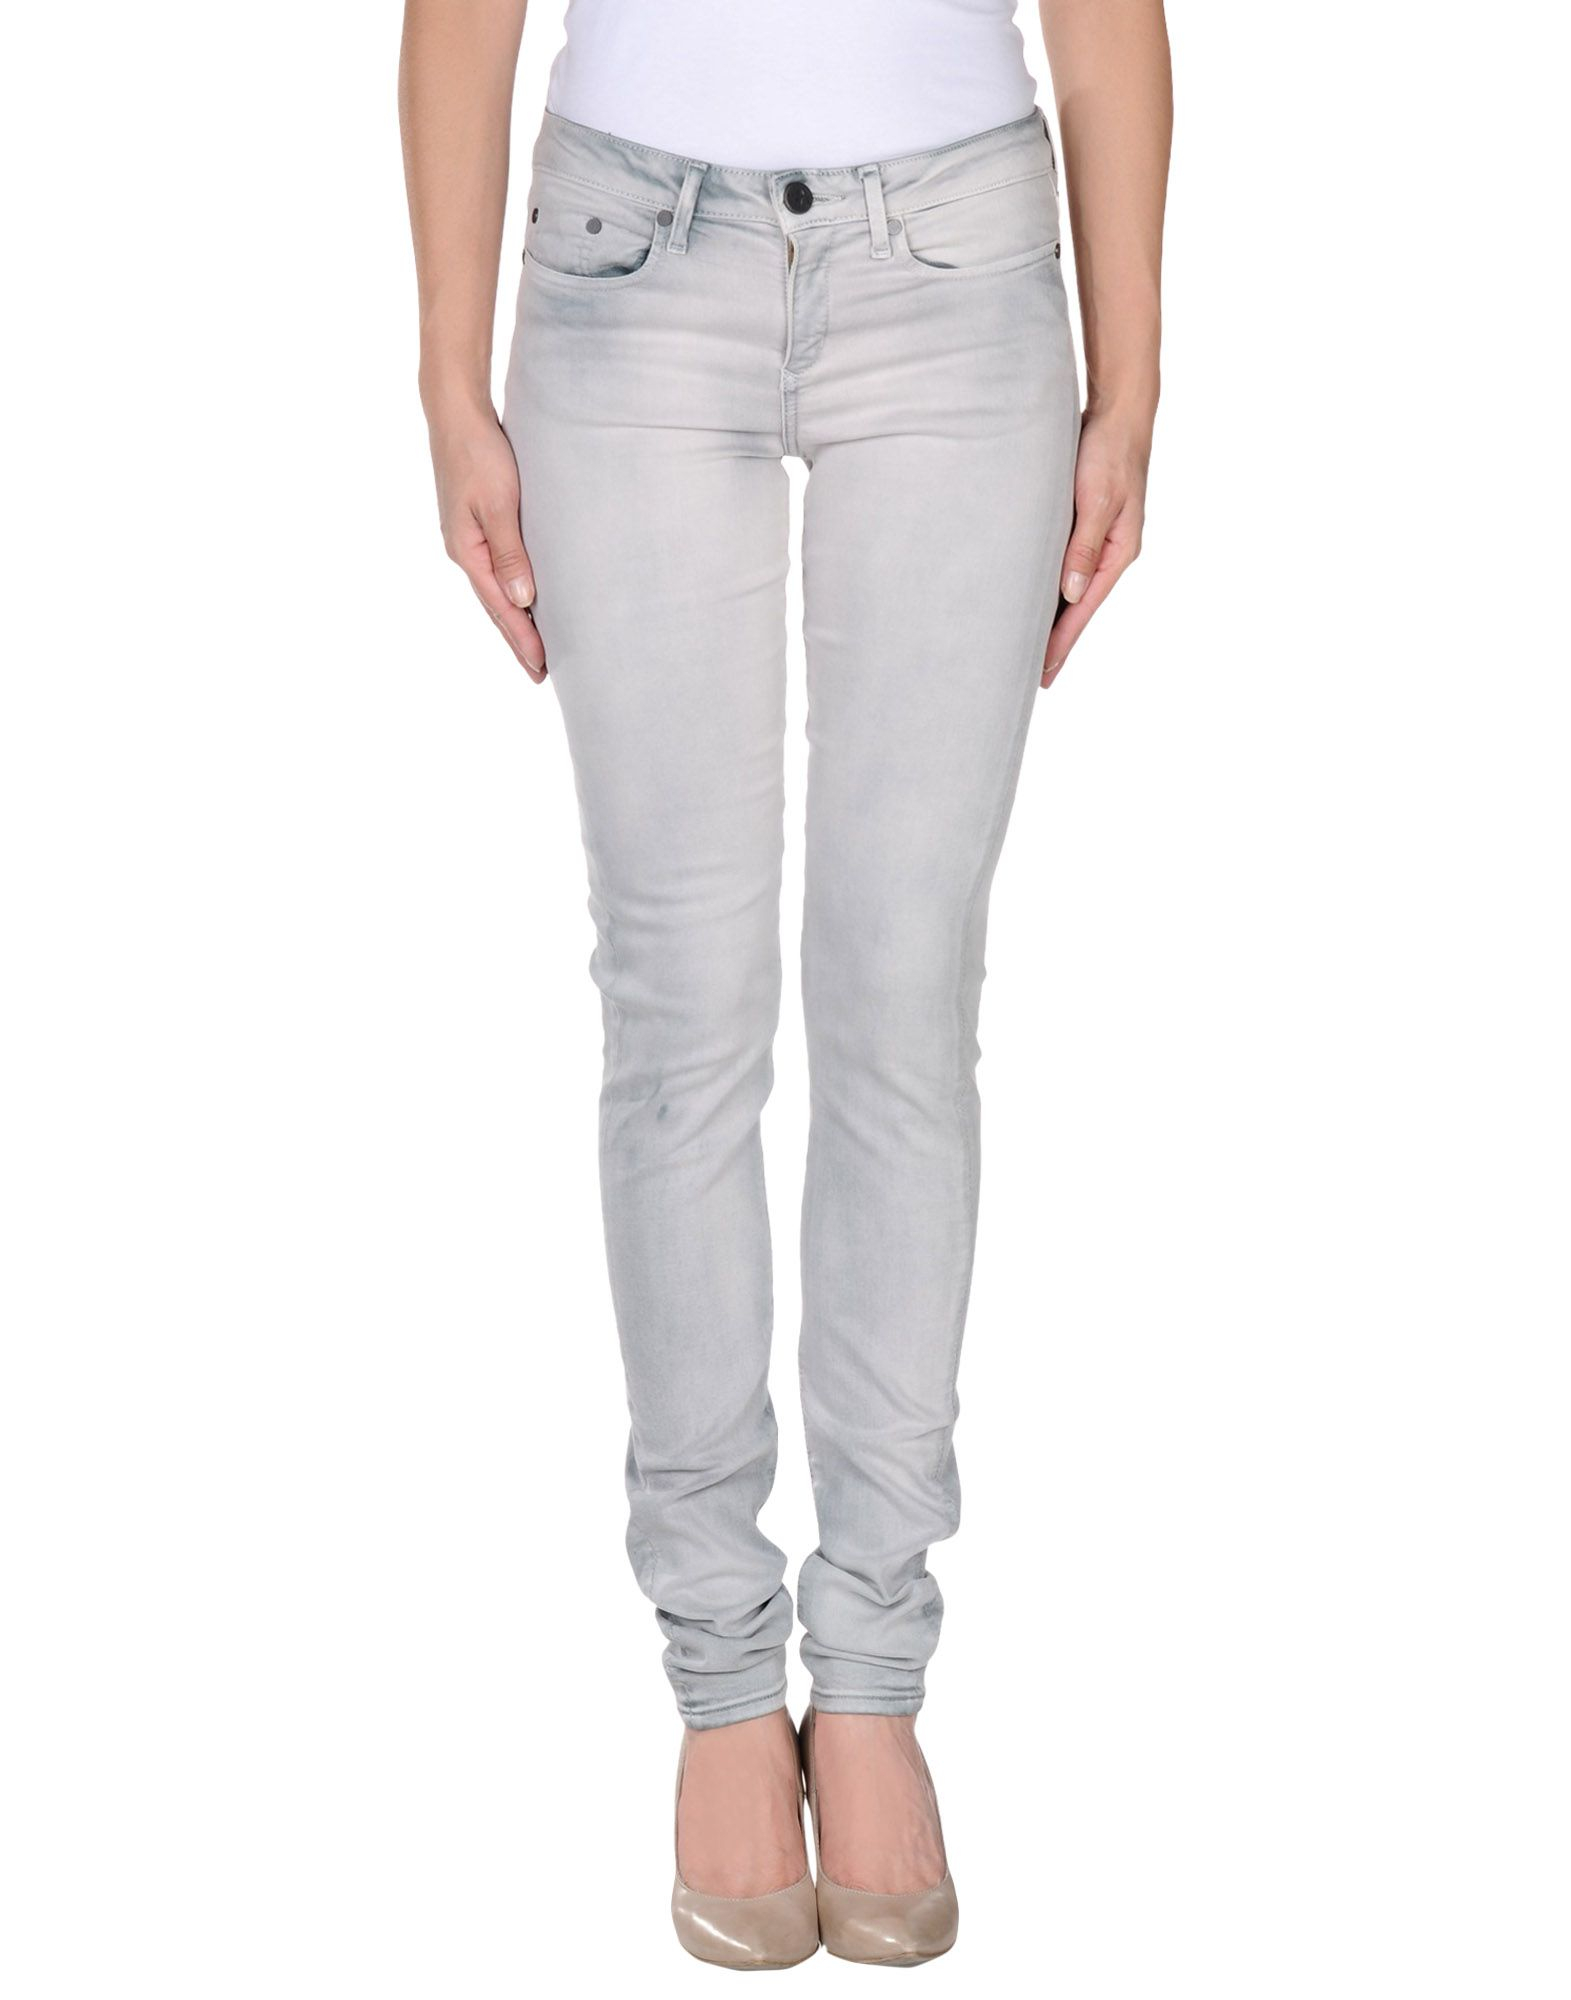 Thvm Denim Trousers in Gray (Light grey) - Save 61% | Lyst